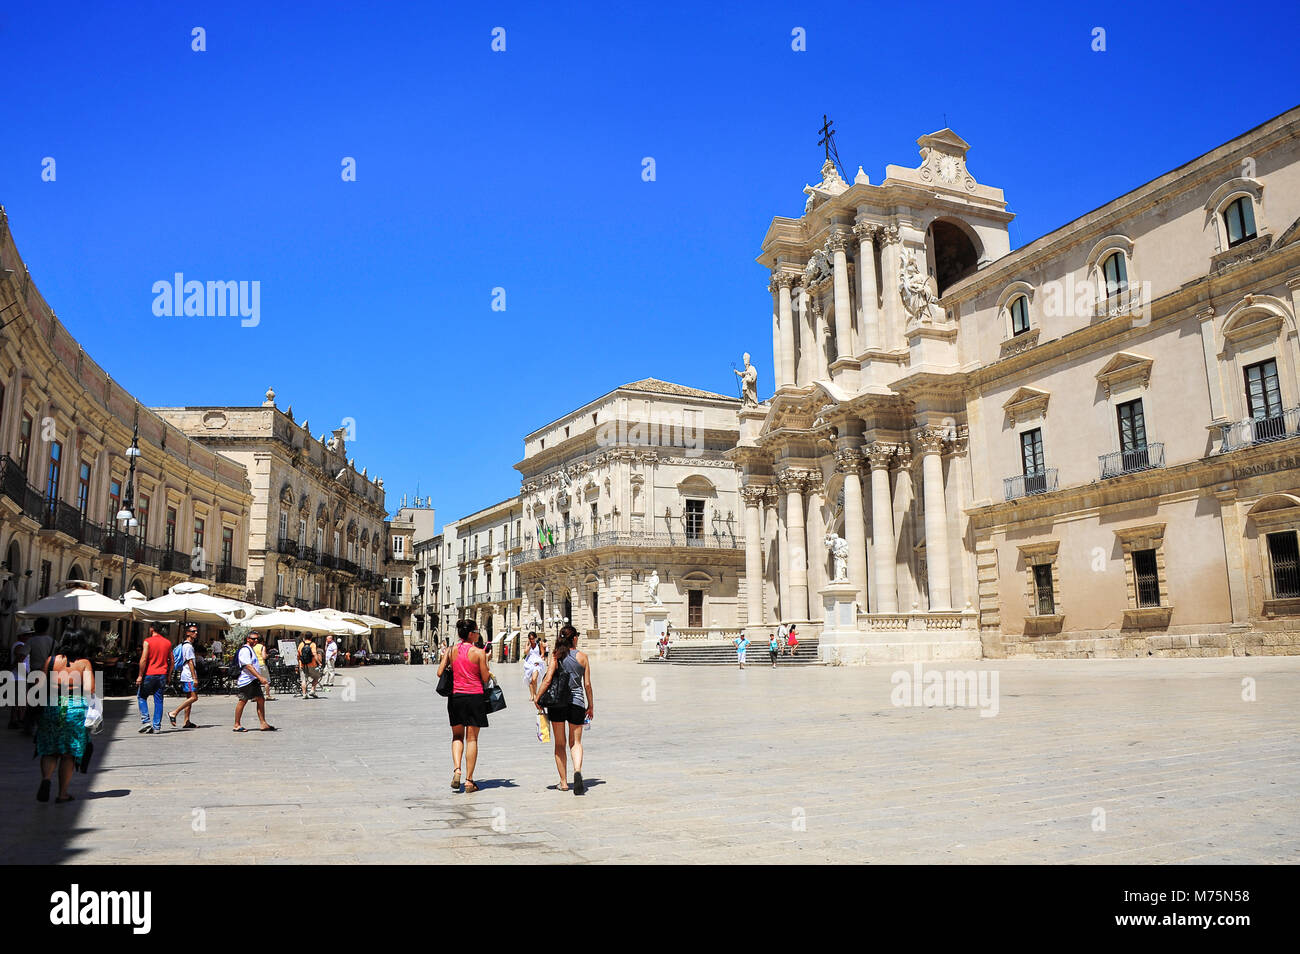 Siracuse, Sicily, Italy - Aug 2012: Tourists on main square, Piazza Duomo, Ortigia island, Syracuse. Beautiful architecture with blue sky background Stock Photo